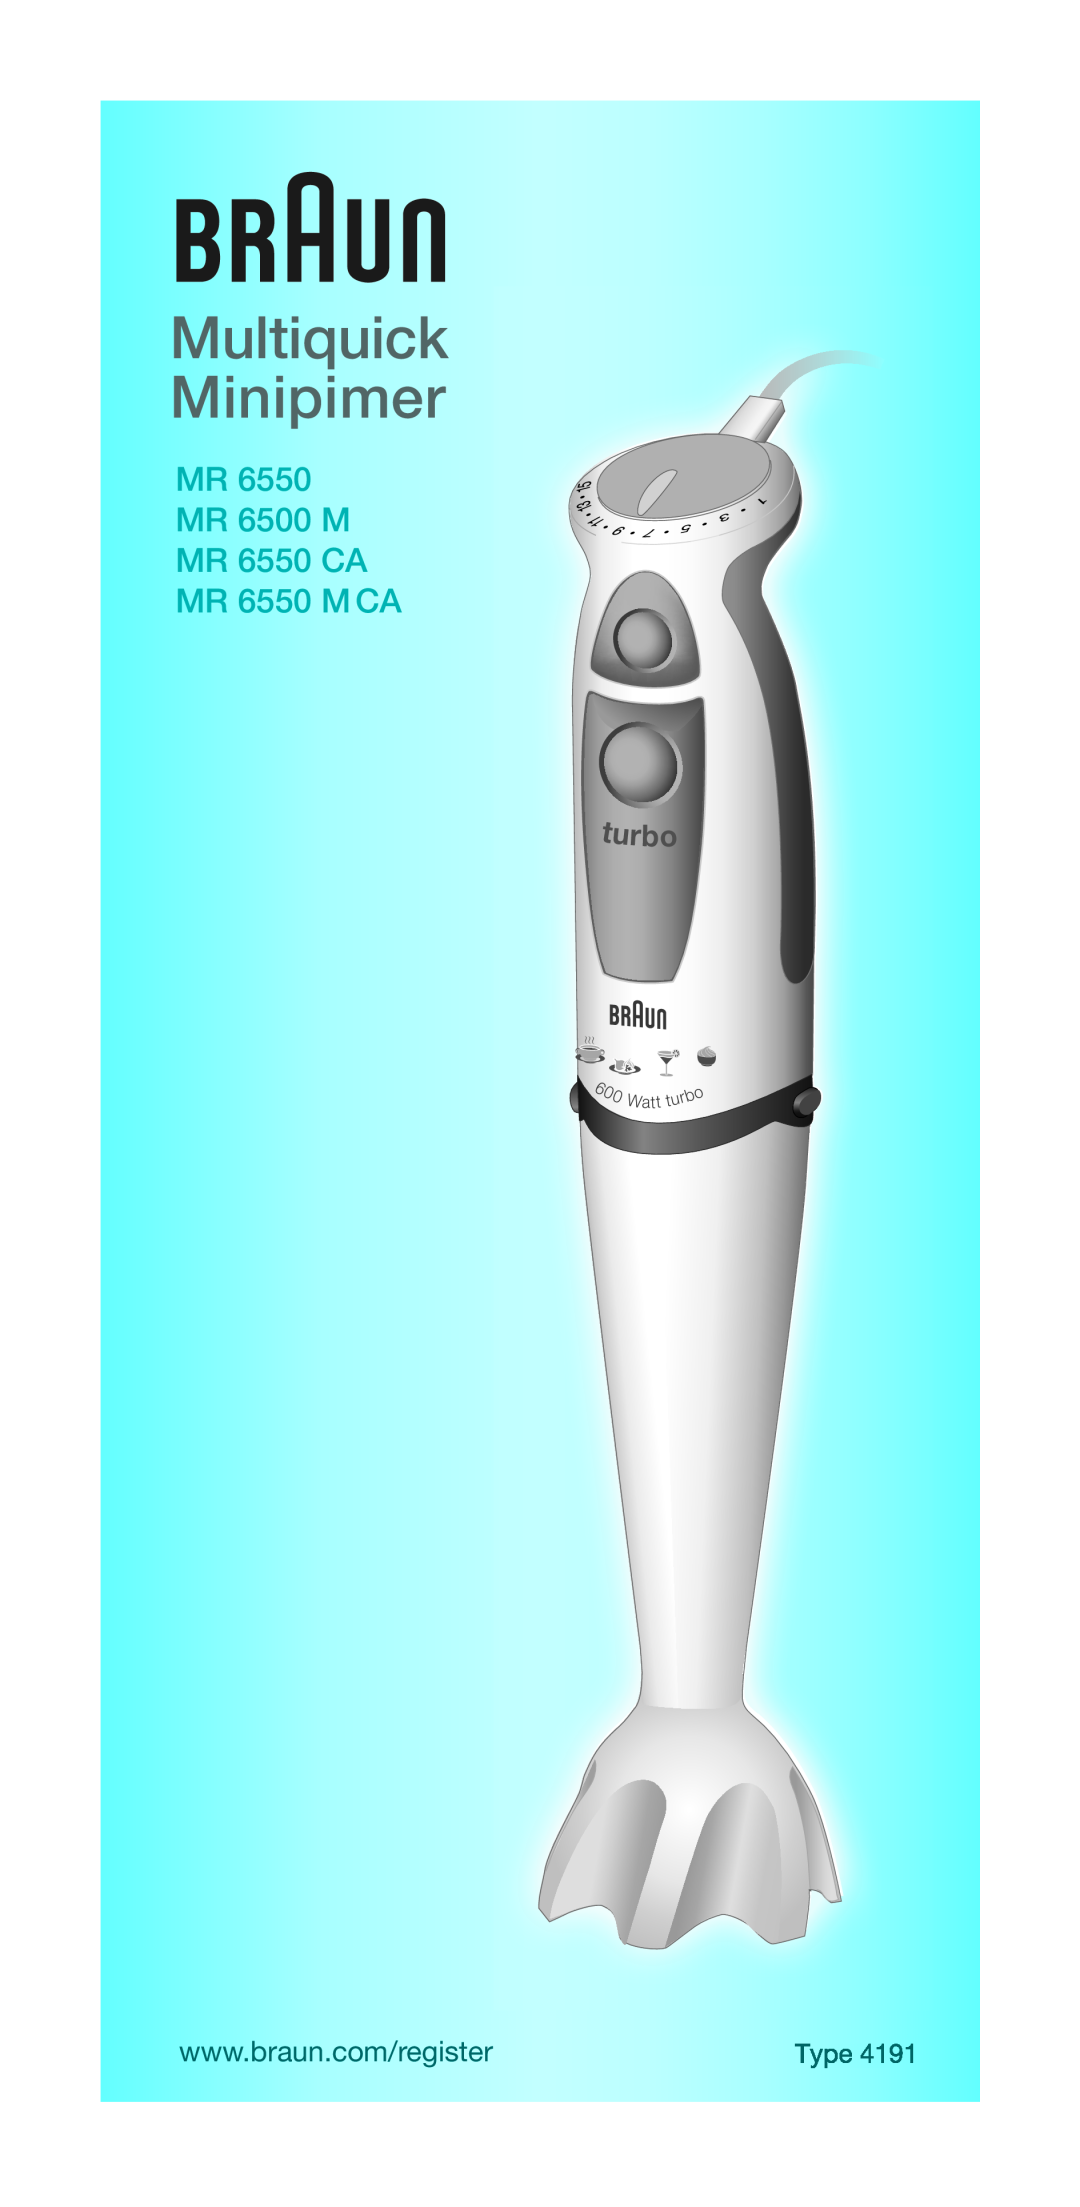 Braun MR 6550 MCA manual Multiquick Minipimer, MR MR 6500 M MR 6550 CA MR 6550 M CA 